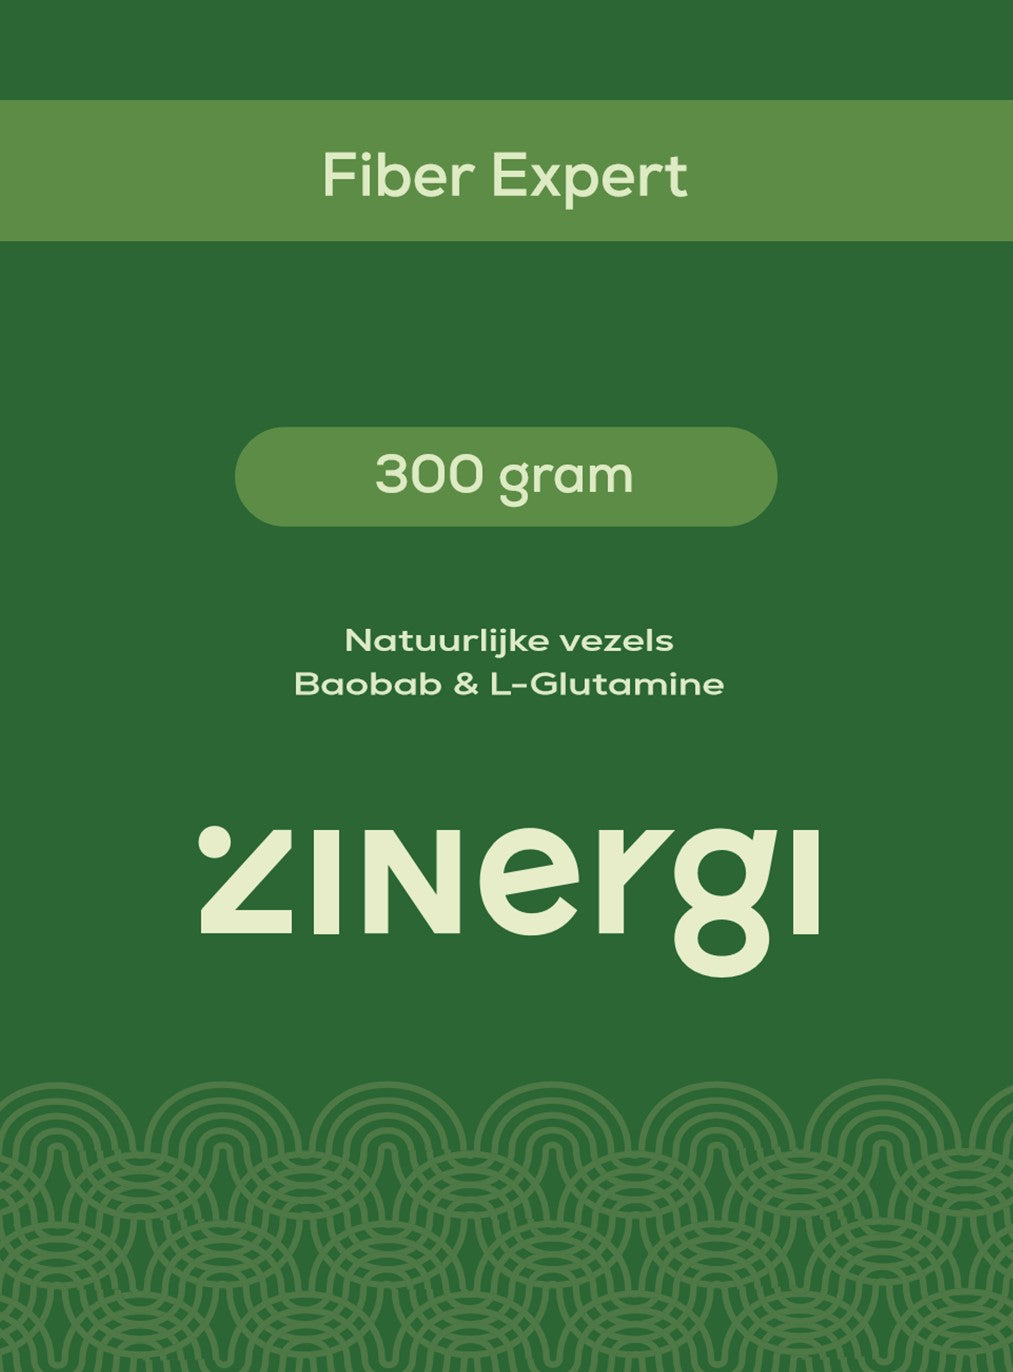 Fiber Expert- Zinergi (prebiotica)